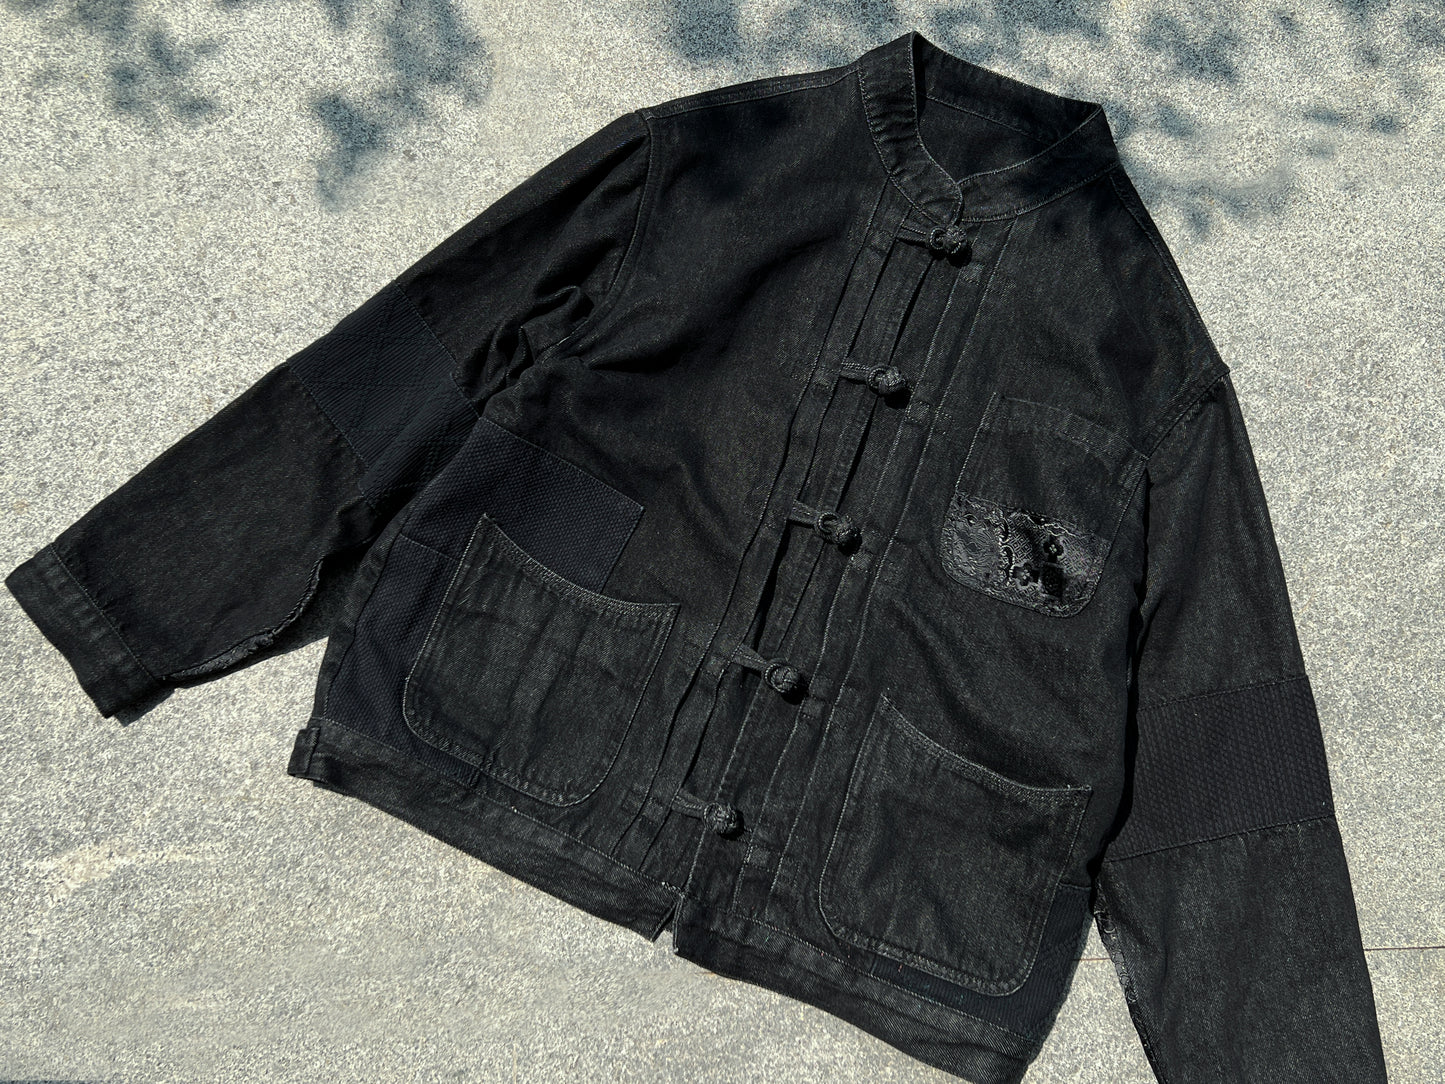 【Limited Edition】限定款 Dragon Embroidery Black Denim KF Jacket【撥雲】